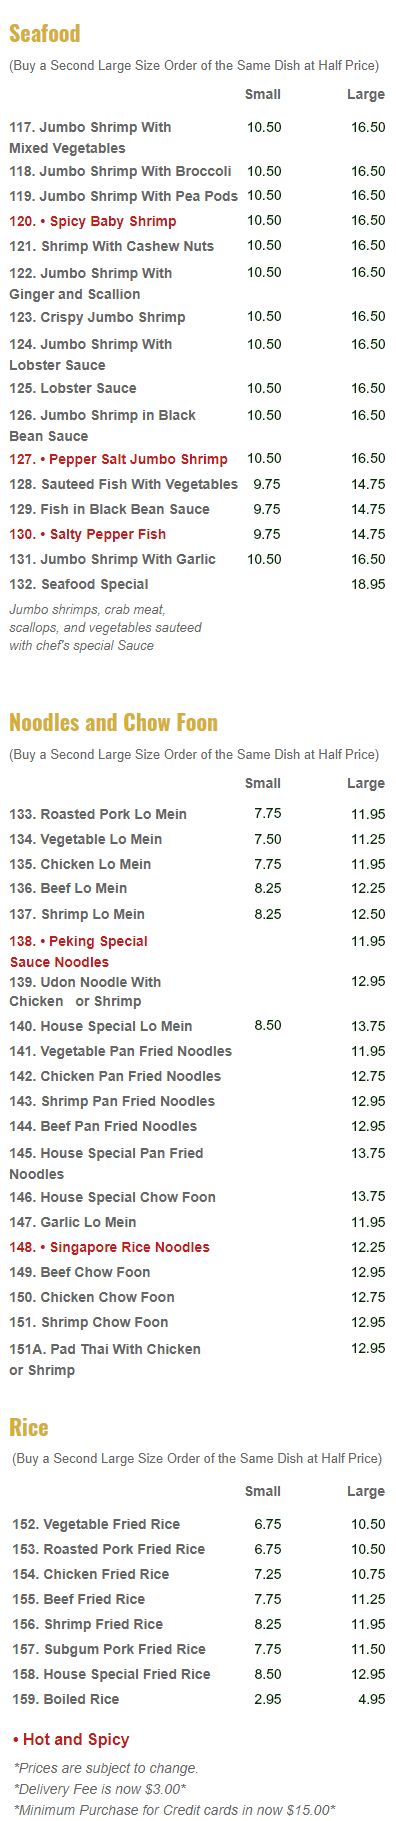 Seafood Noodles and Rice Menu